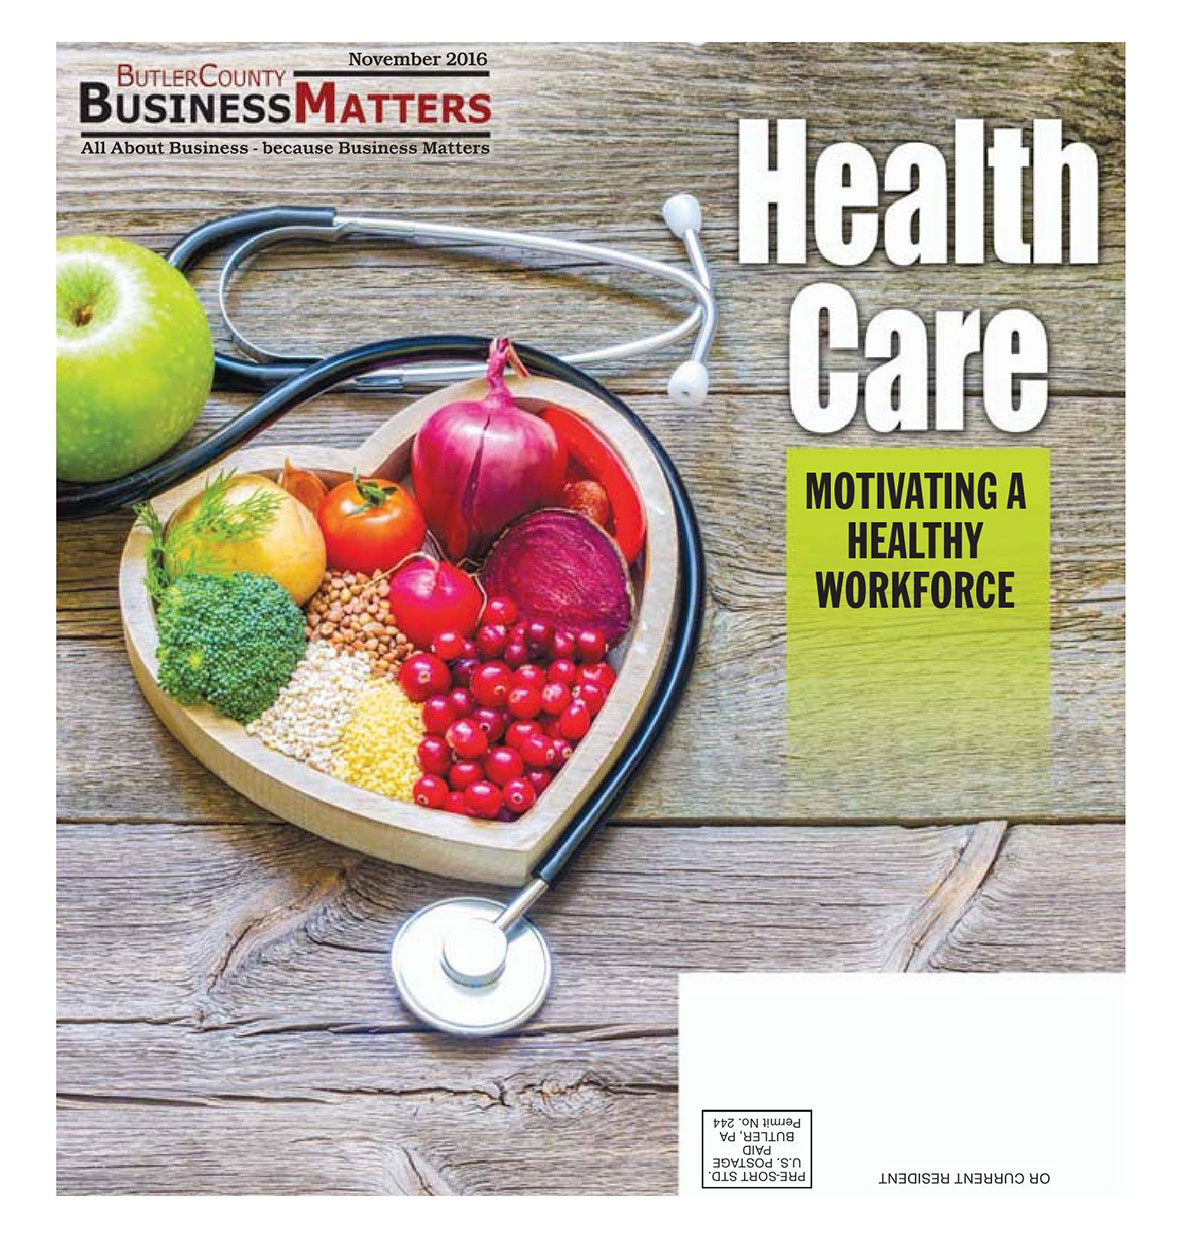 November 2016 - Health Care - Motivating A Healthy Workforce